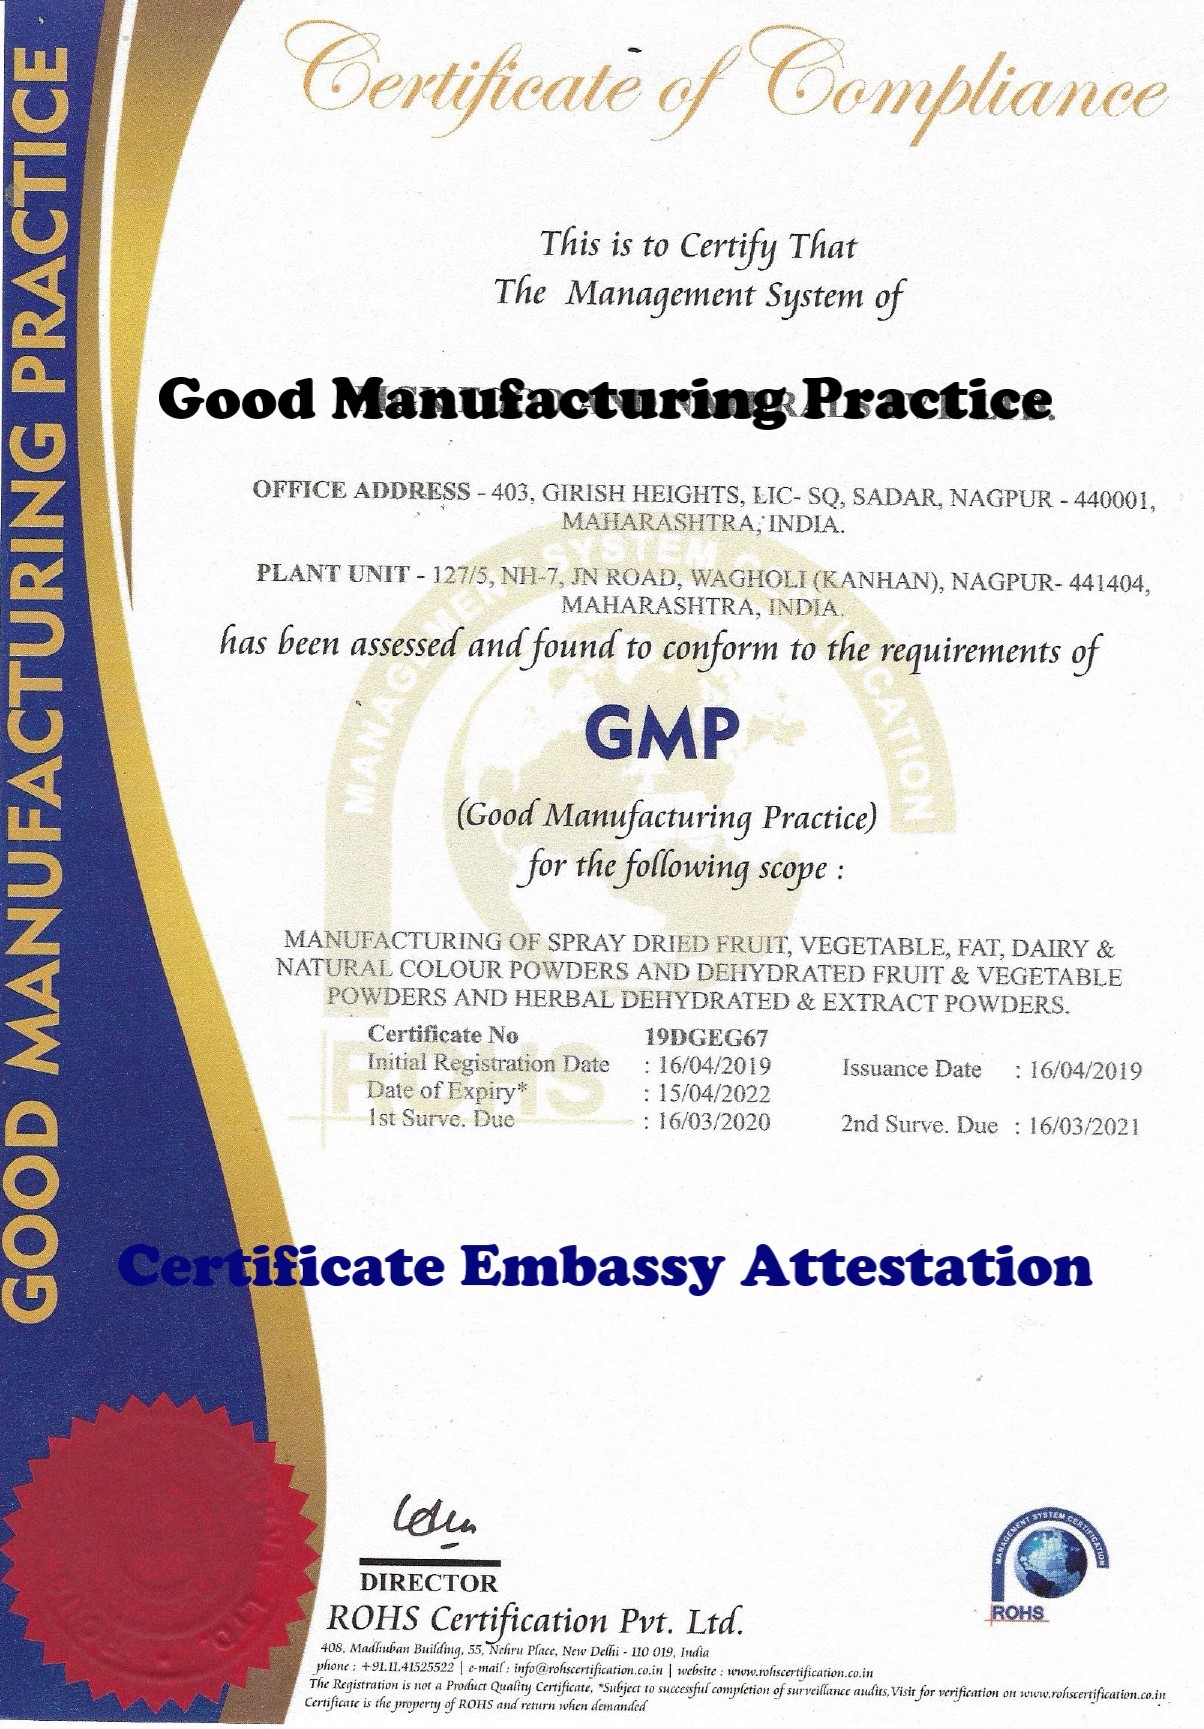 GMP Certificate Attestation from Burkina Faso Embassy